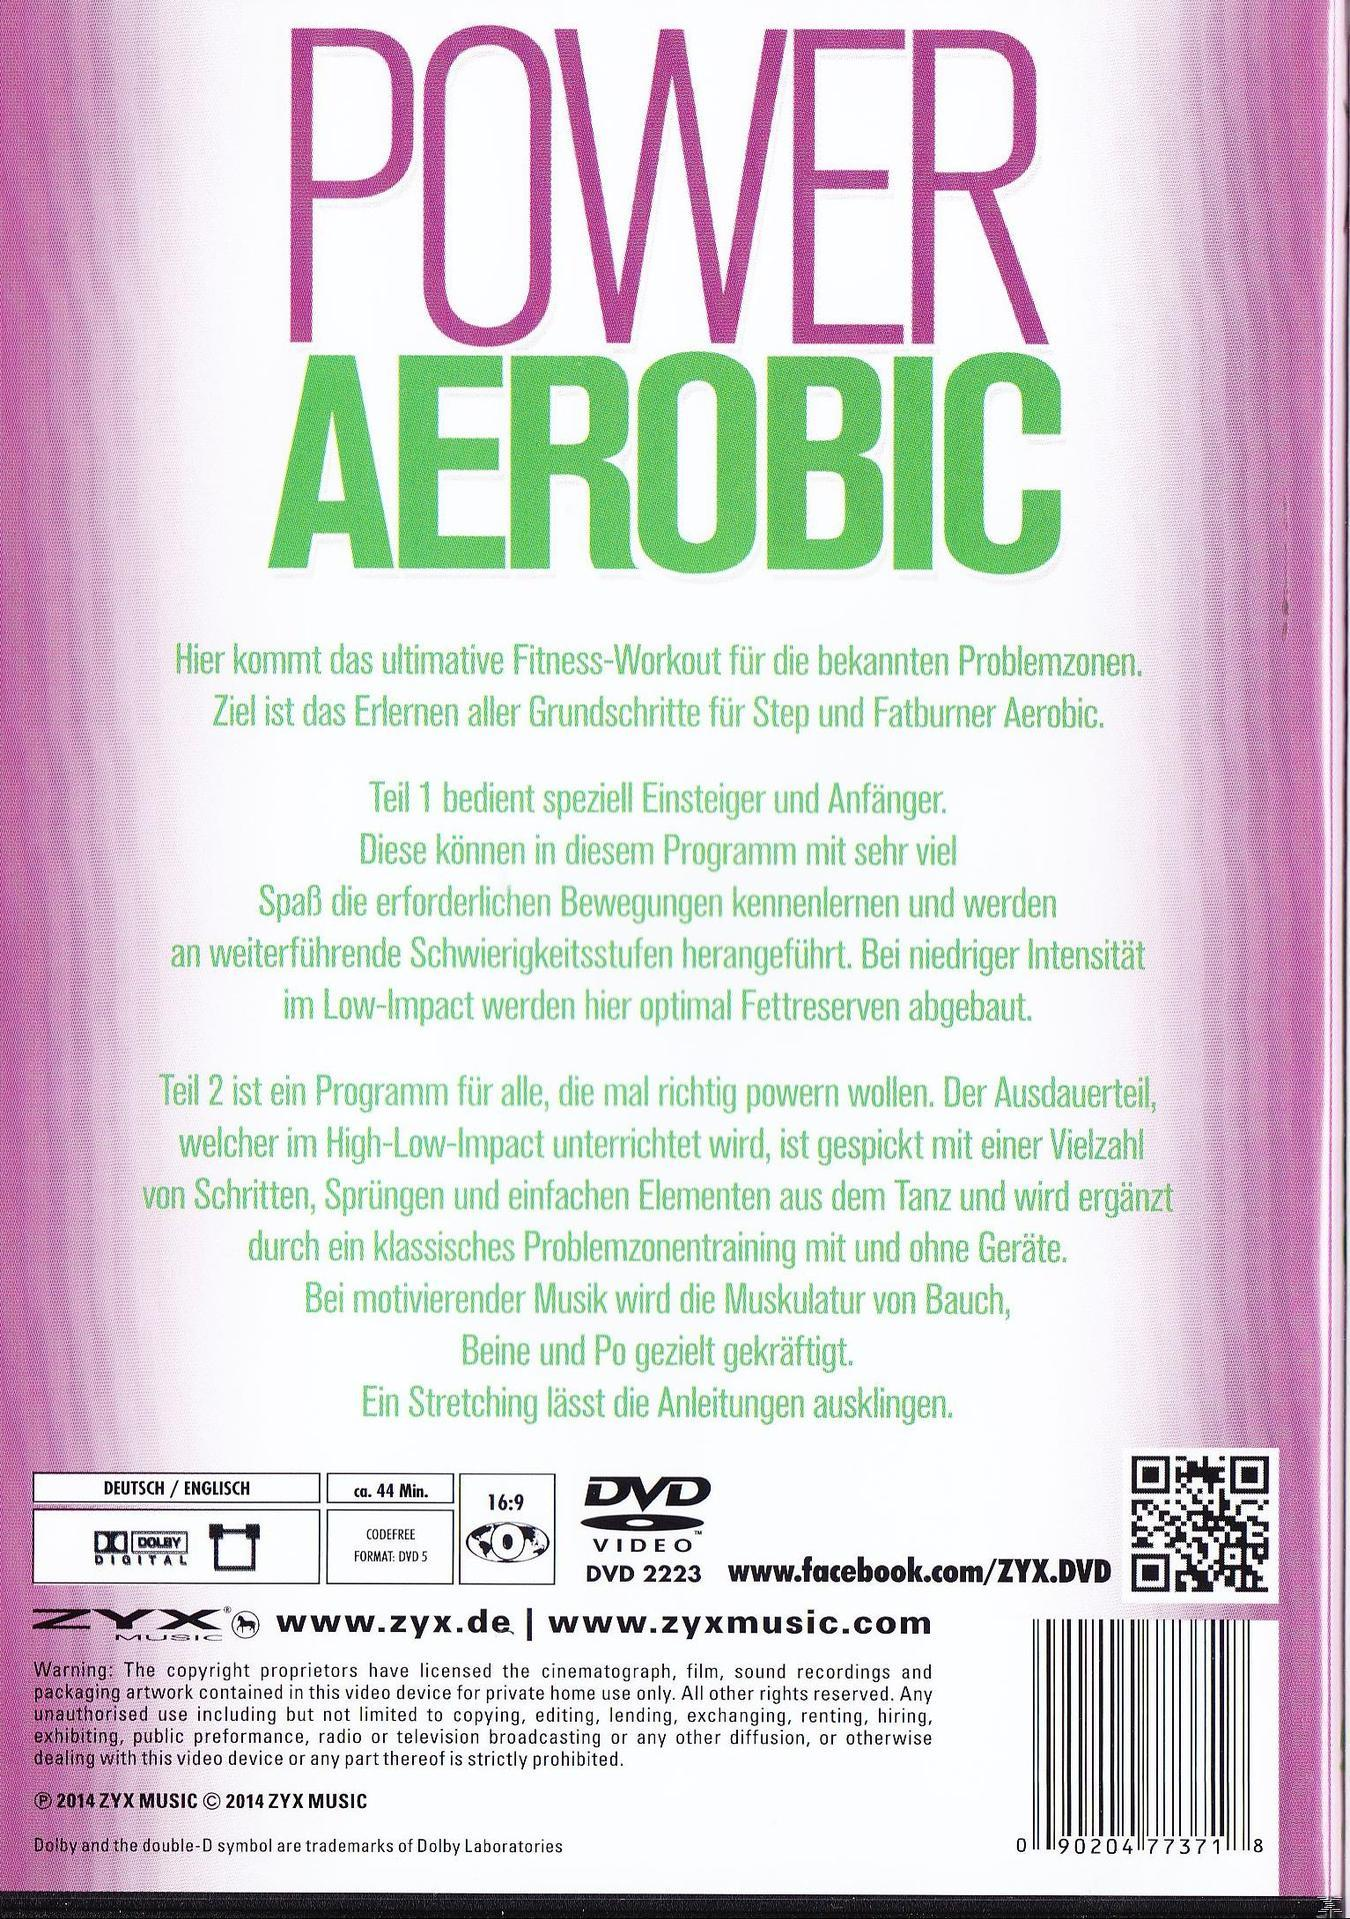 POWER AEROBIC DVD